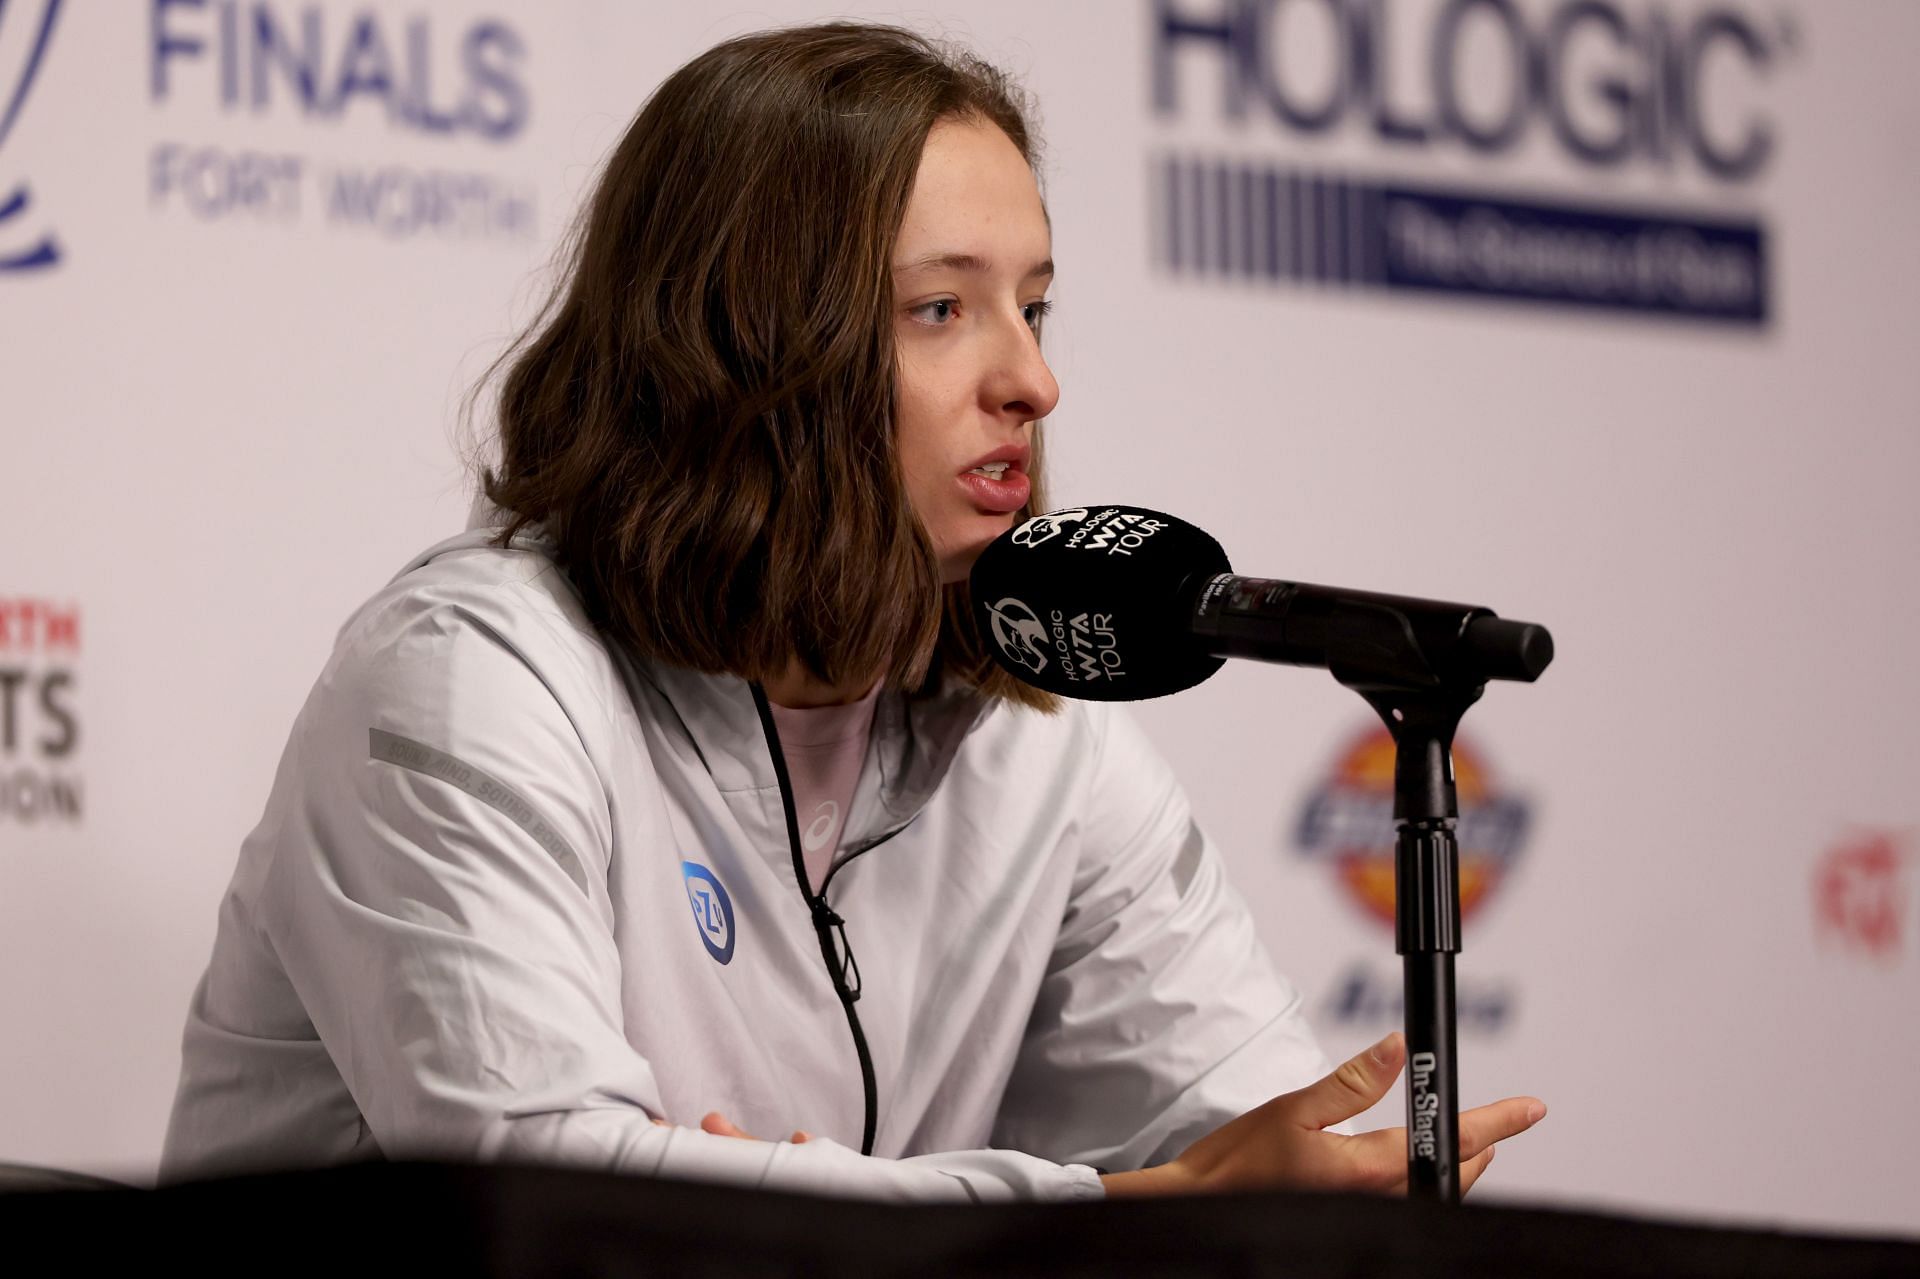 Iga Swiatek pictured at the 2022 WTA Finals.